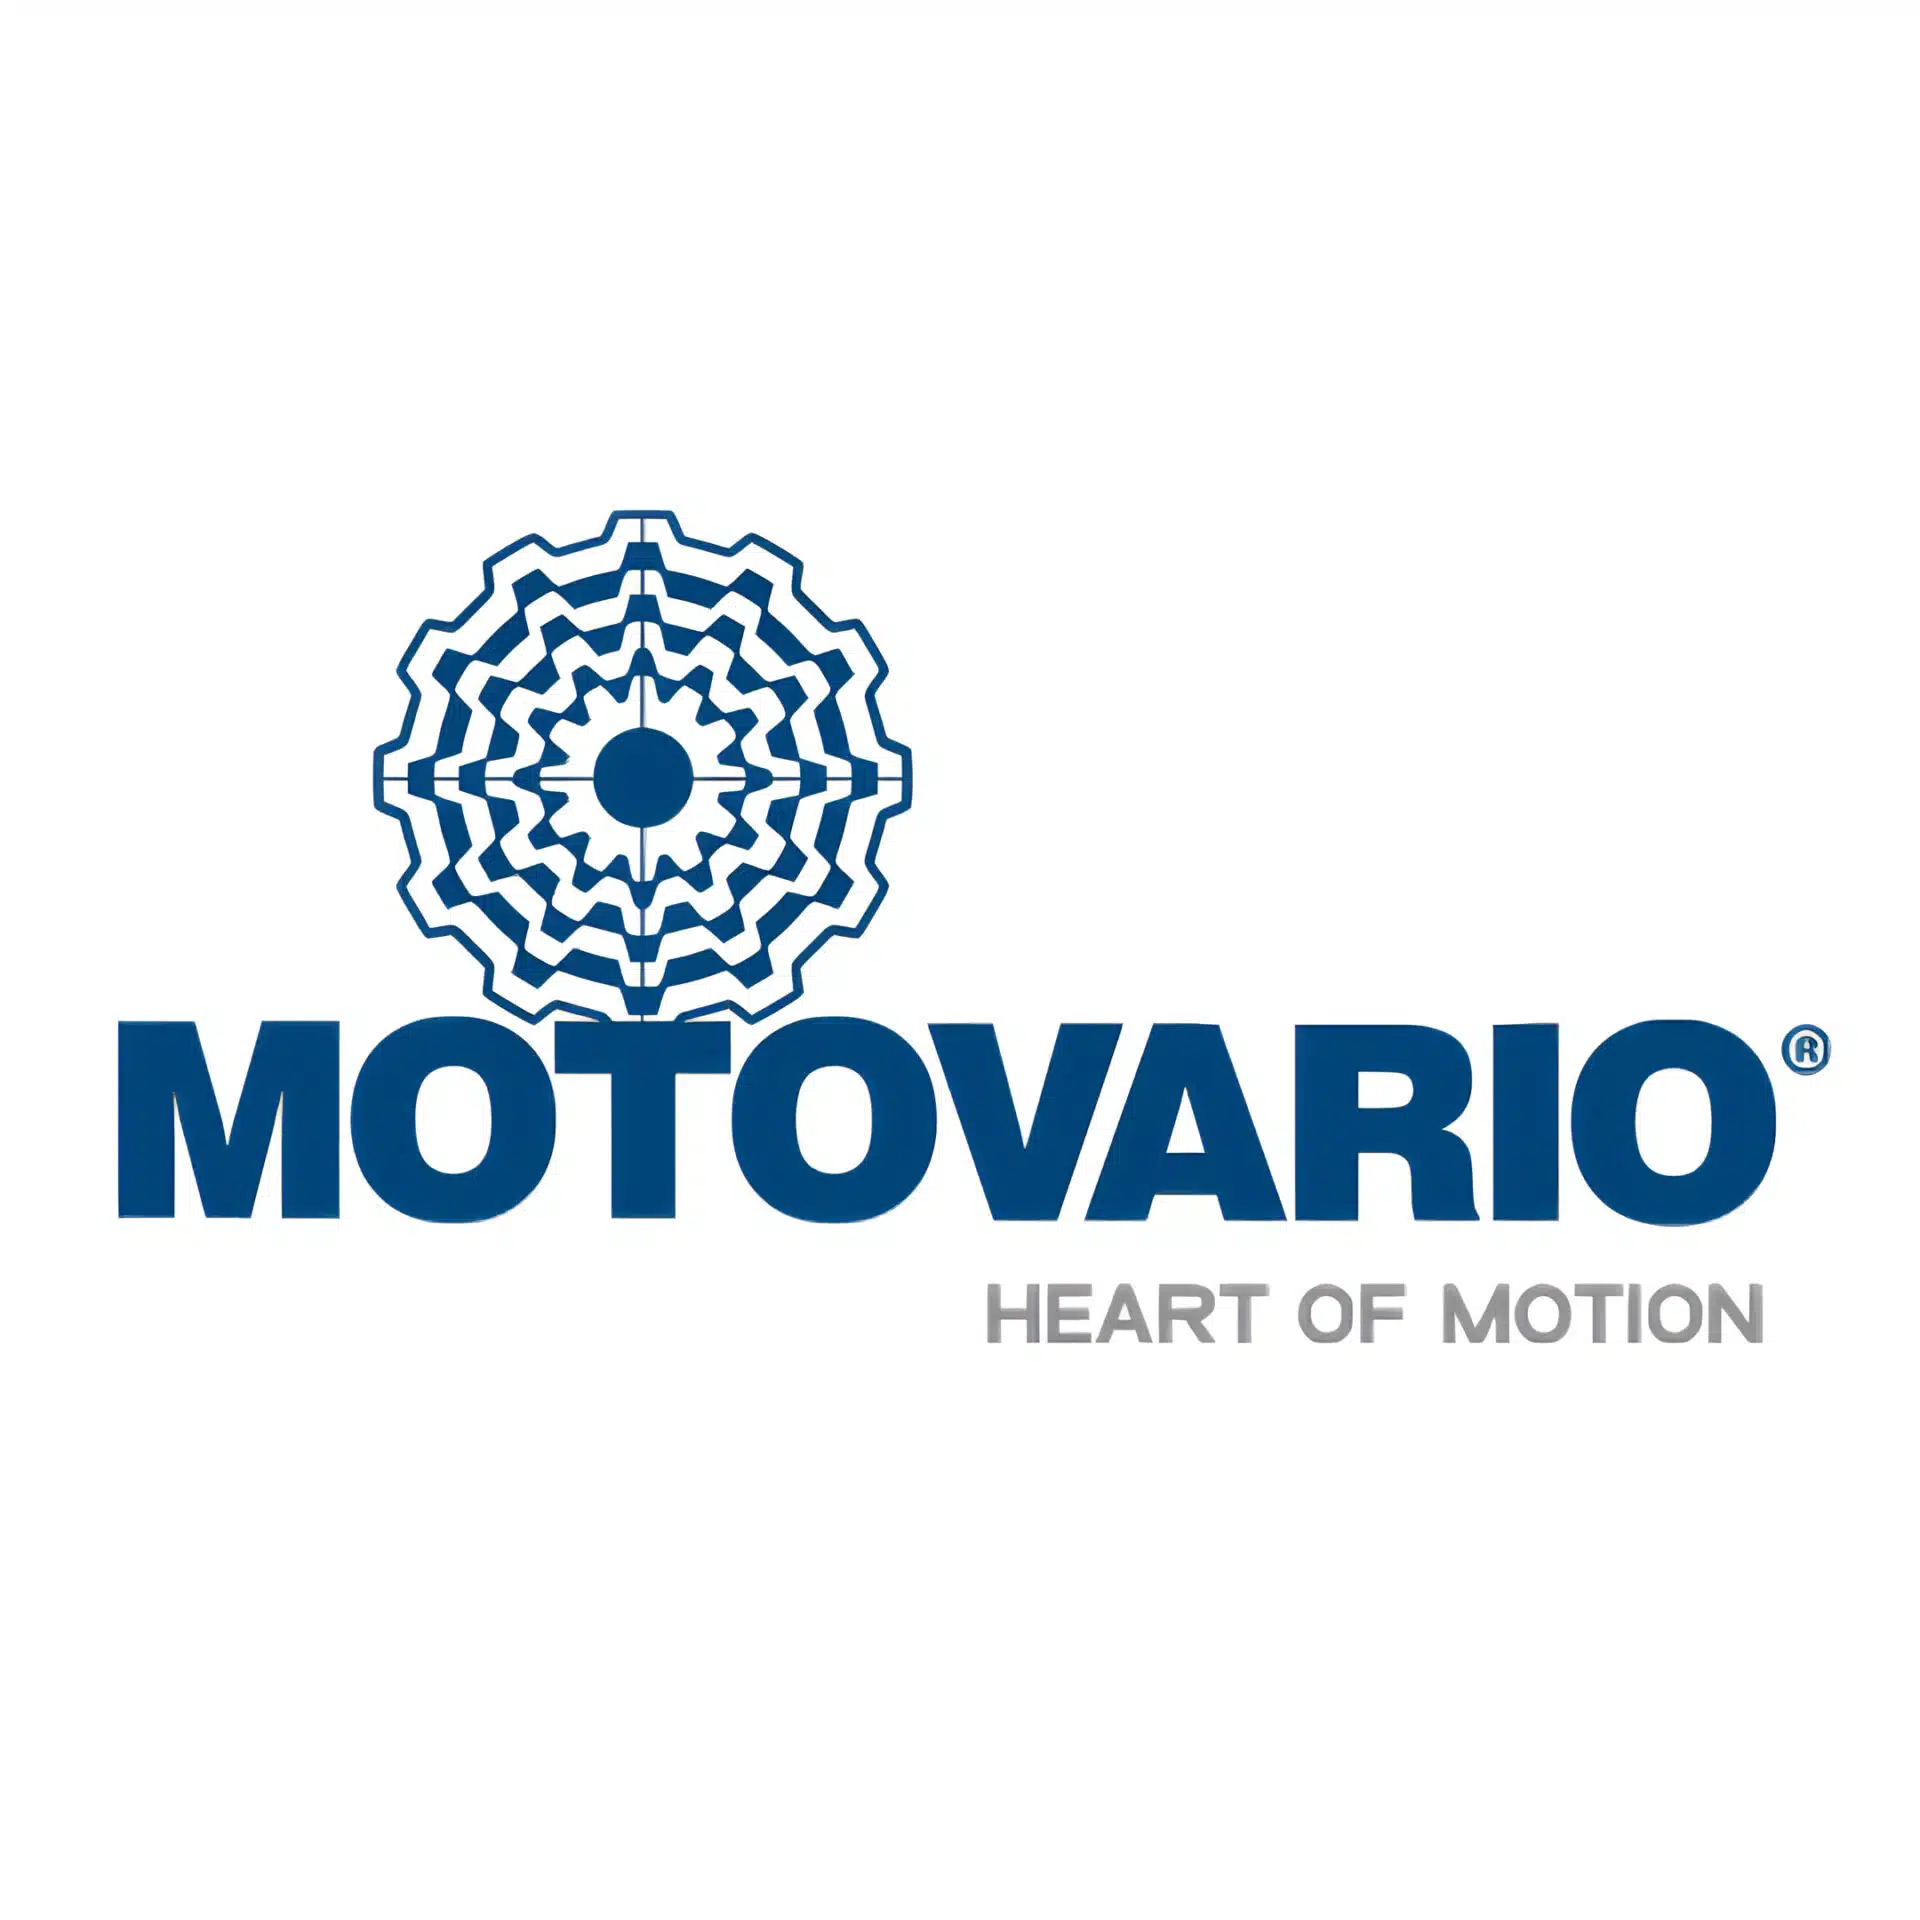 Motovario Logo